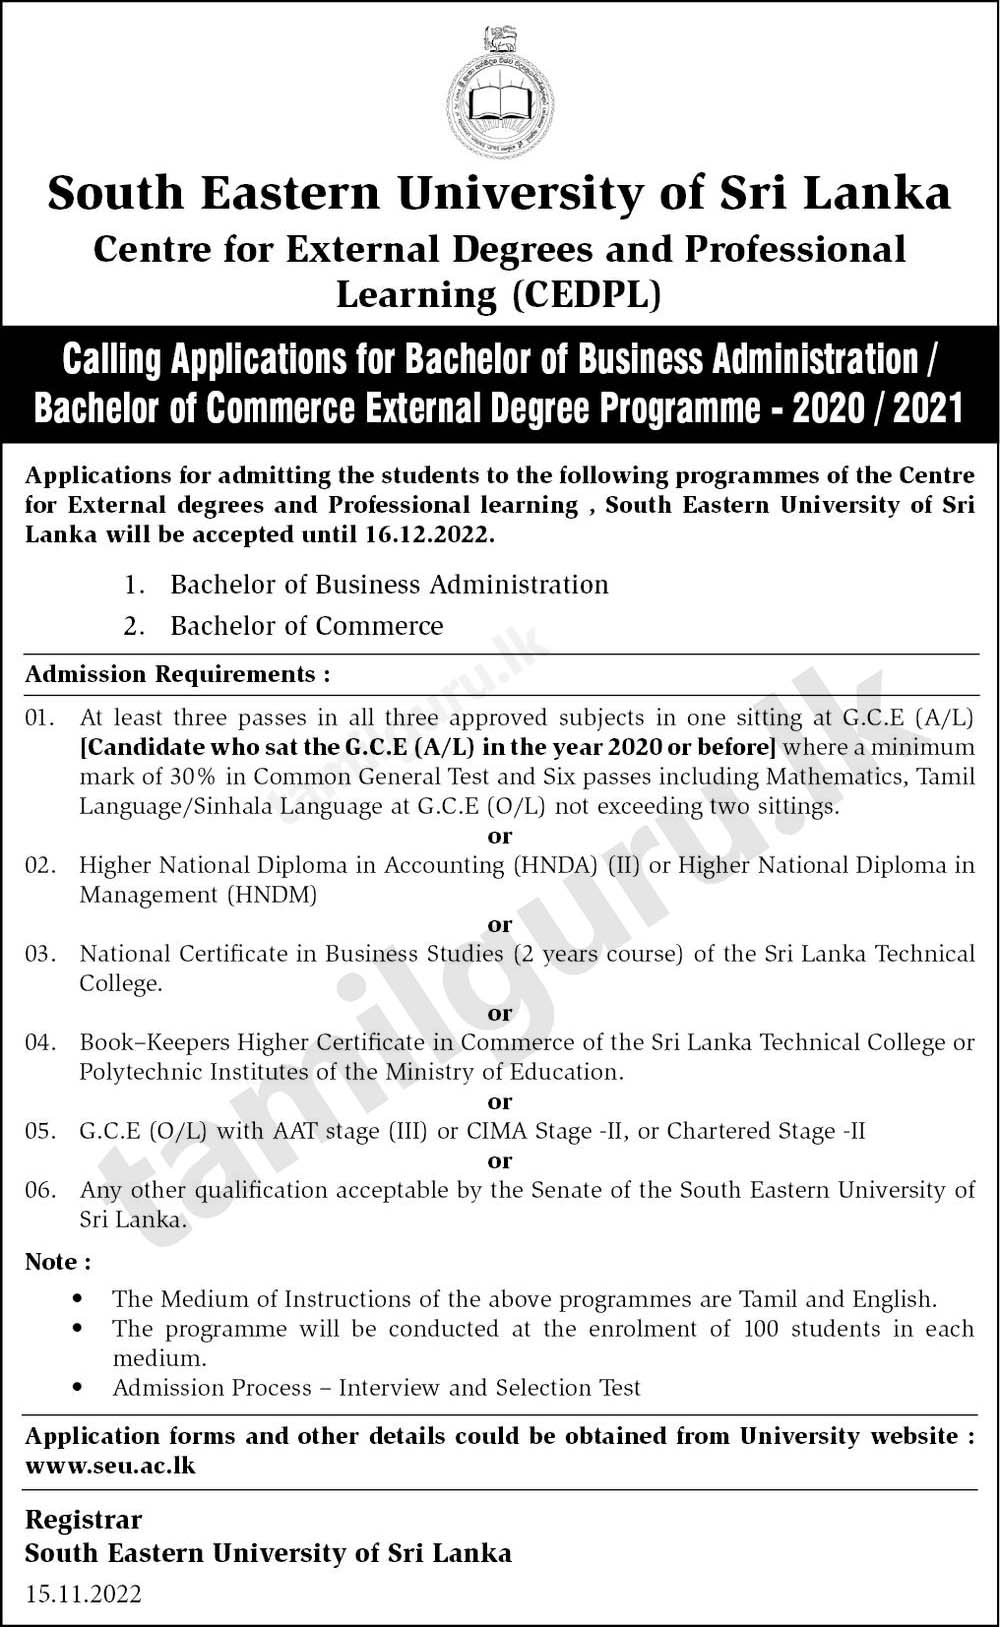 Calling Applications for BBA & BCom External Degree Programmes 2022 (2020/2021) - South Eastern University of Sri Lanka (SEUSL)